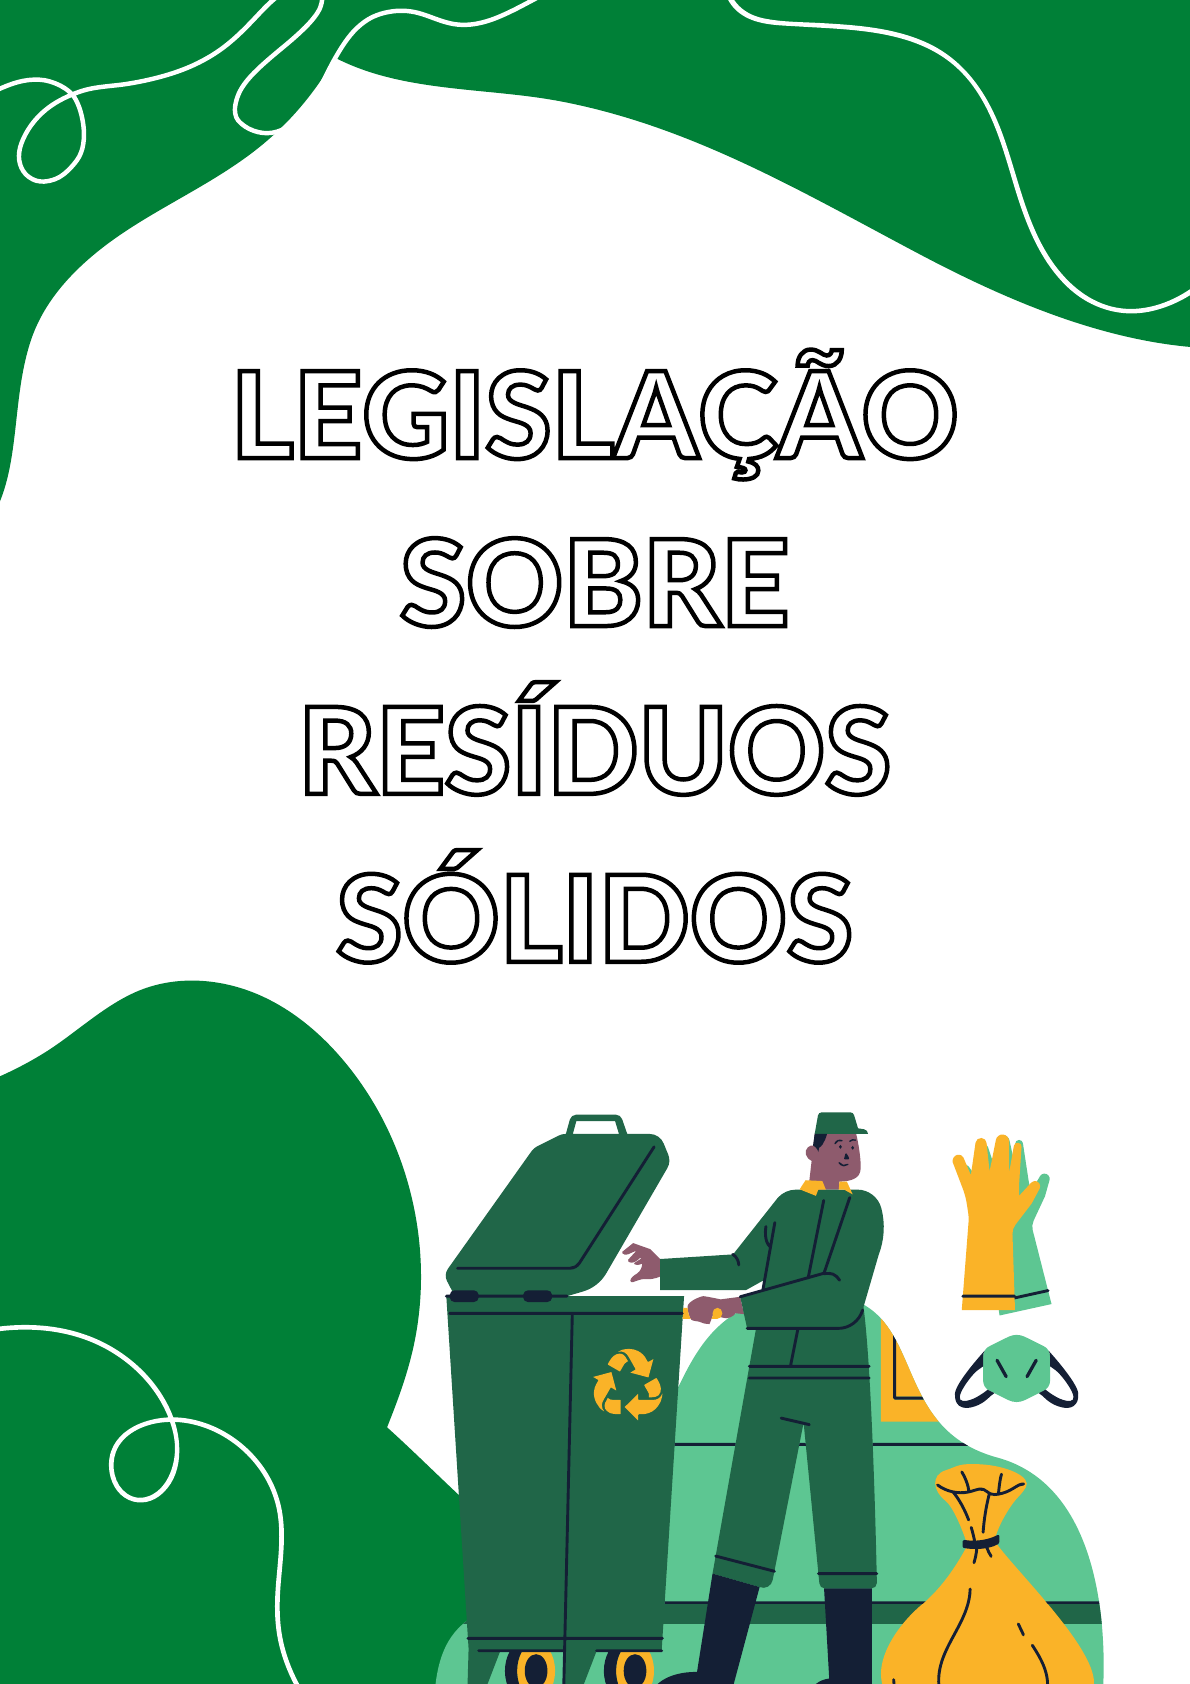 gratis - Recicloteca